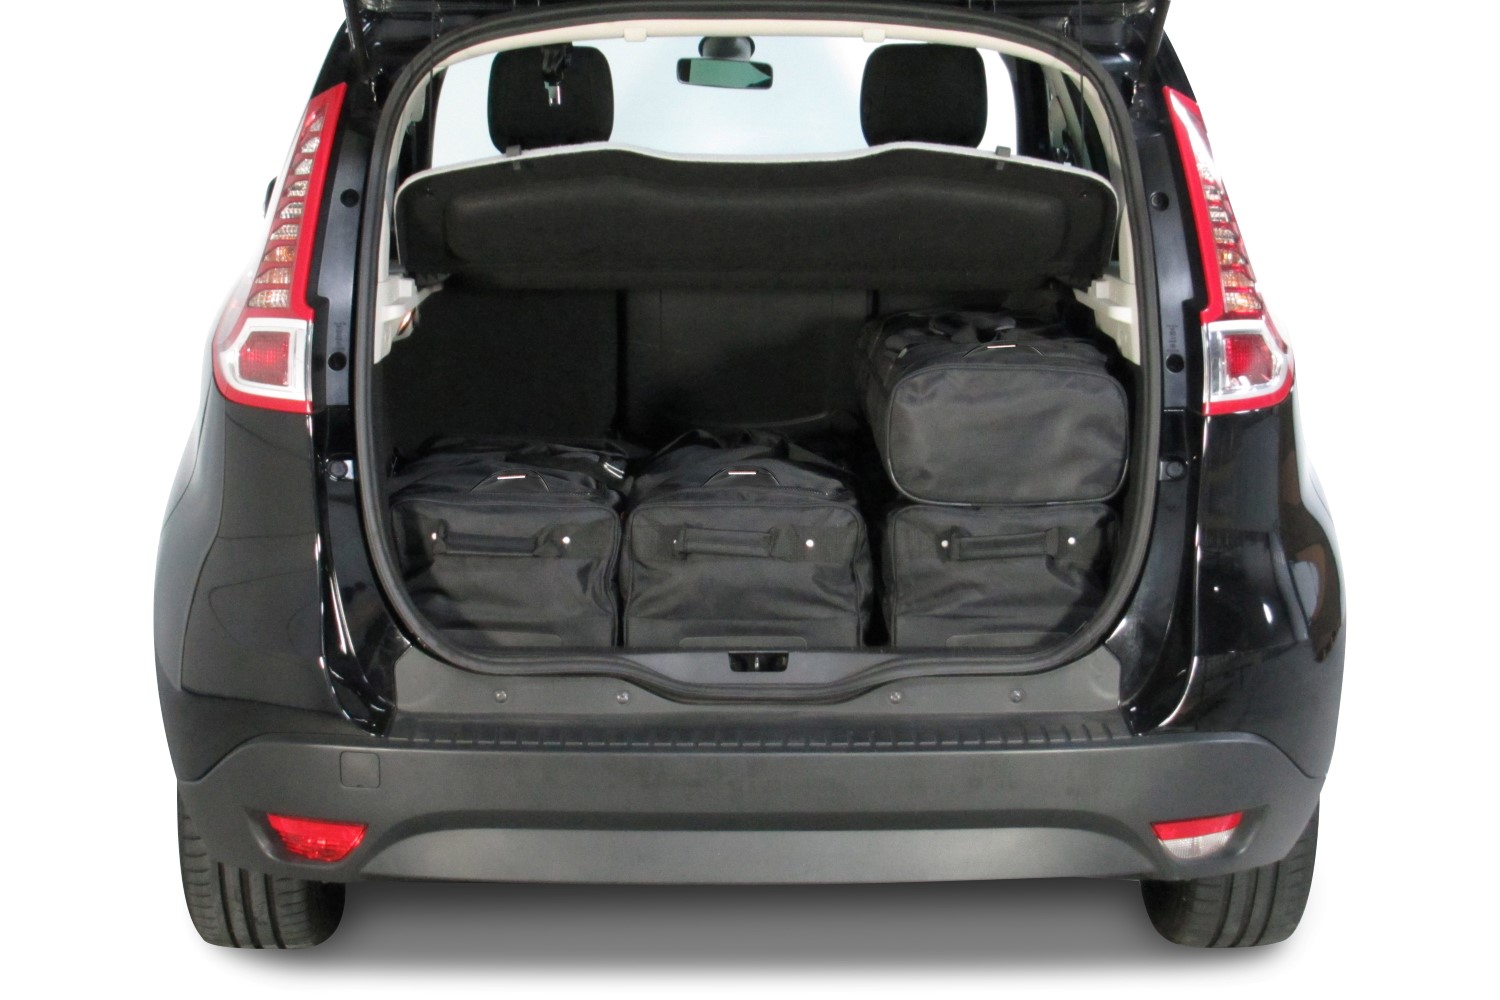 https://www.car-bags.com/images/stories/virtuemart/product/r10301s-renault-scenic-09-car-bags-3.jpg